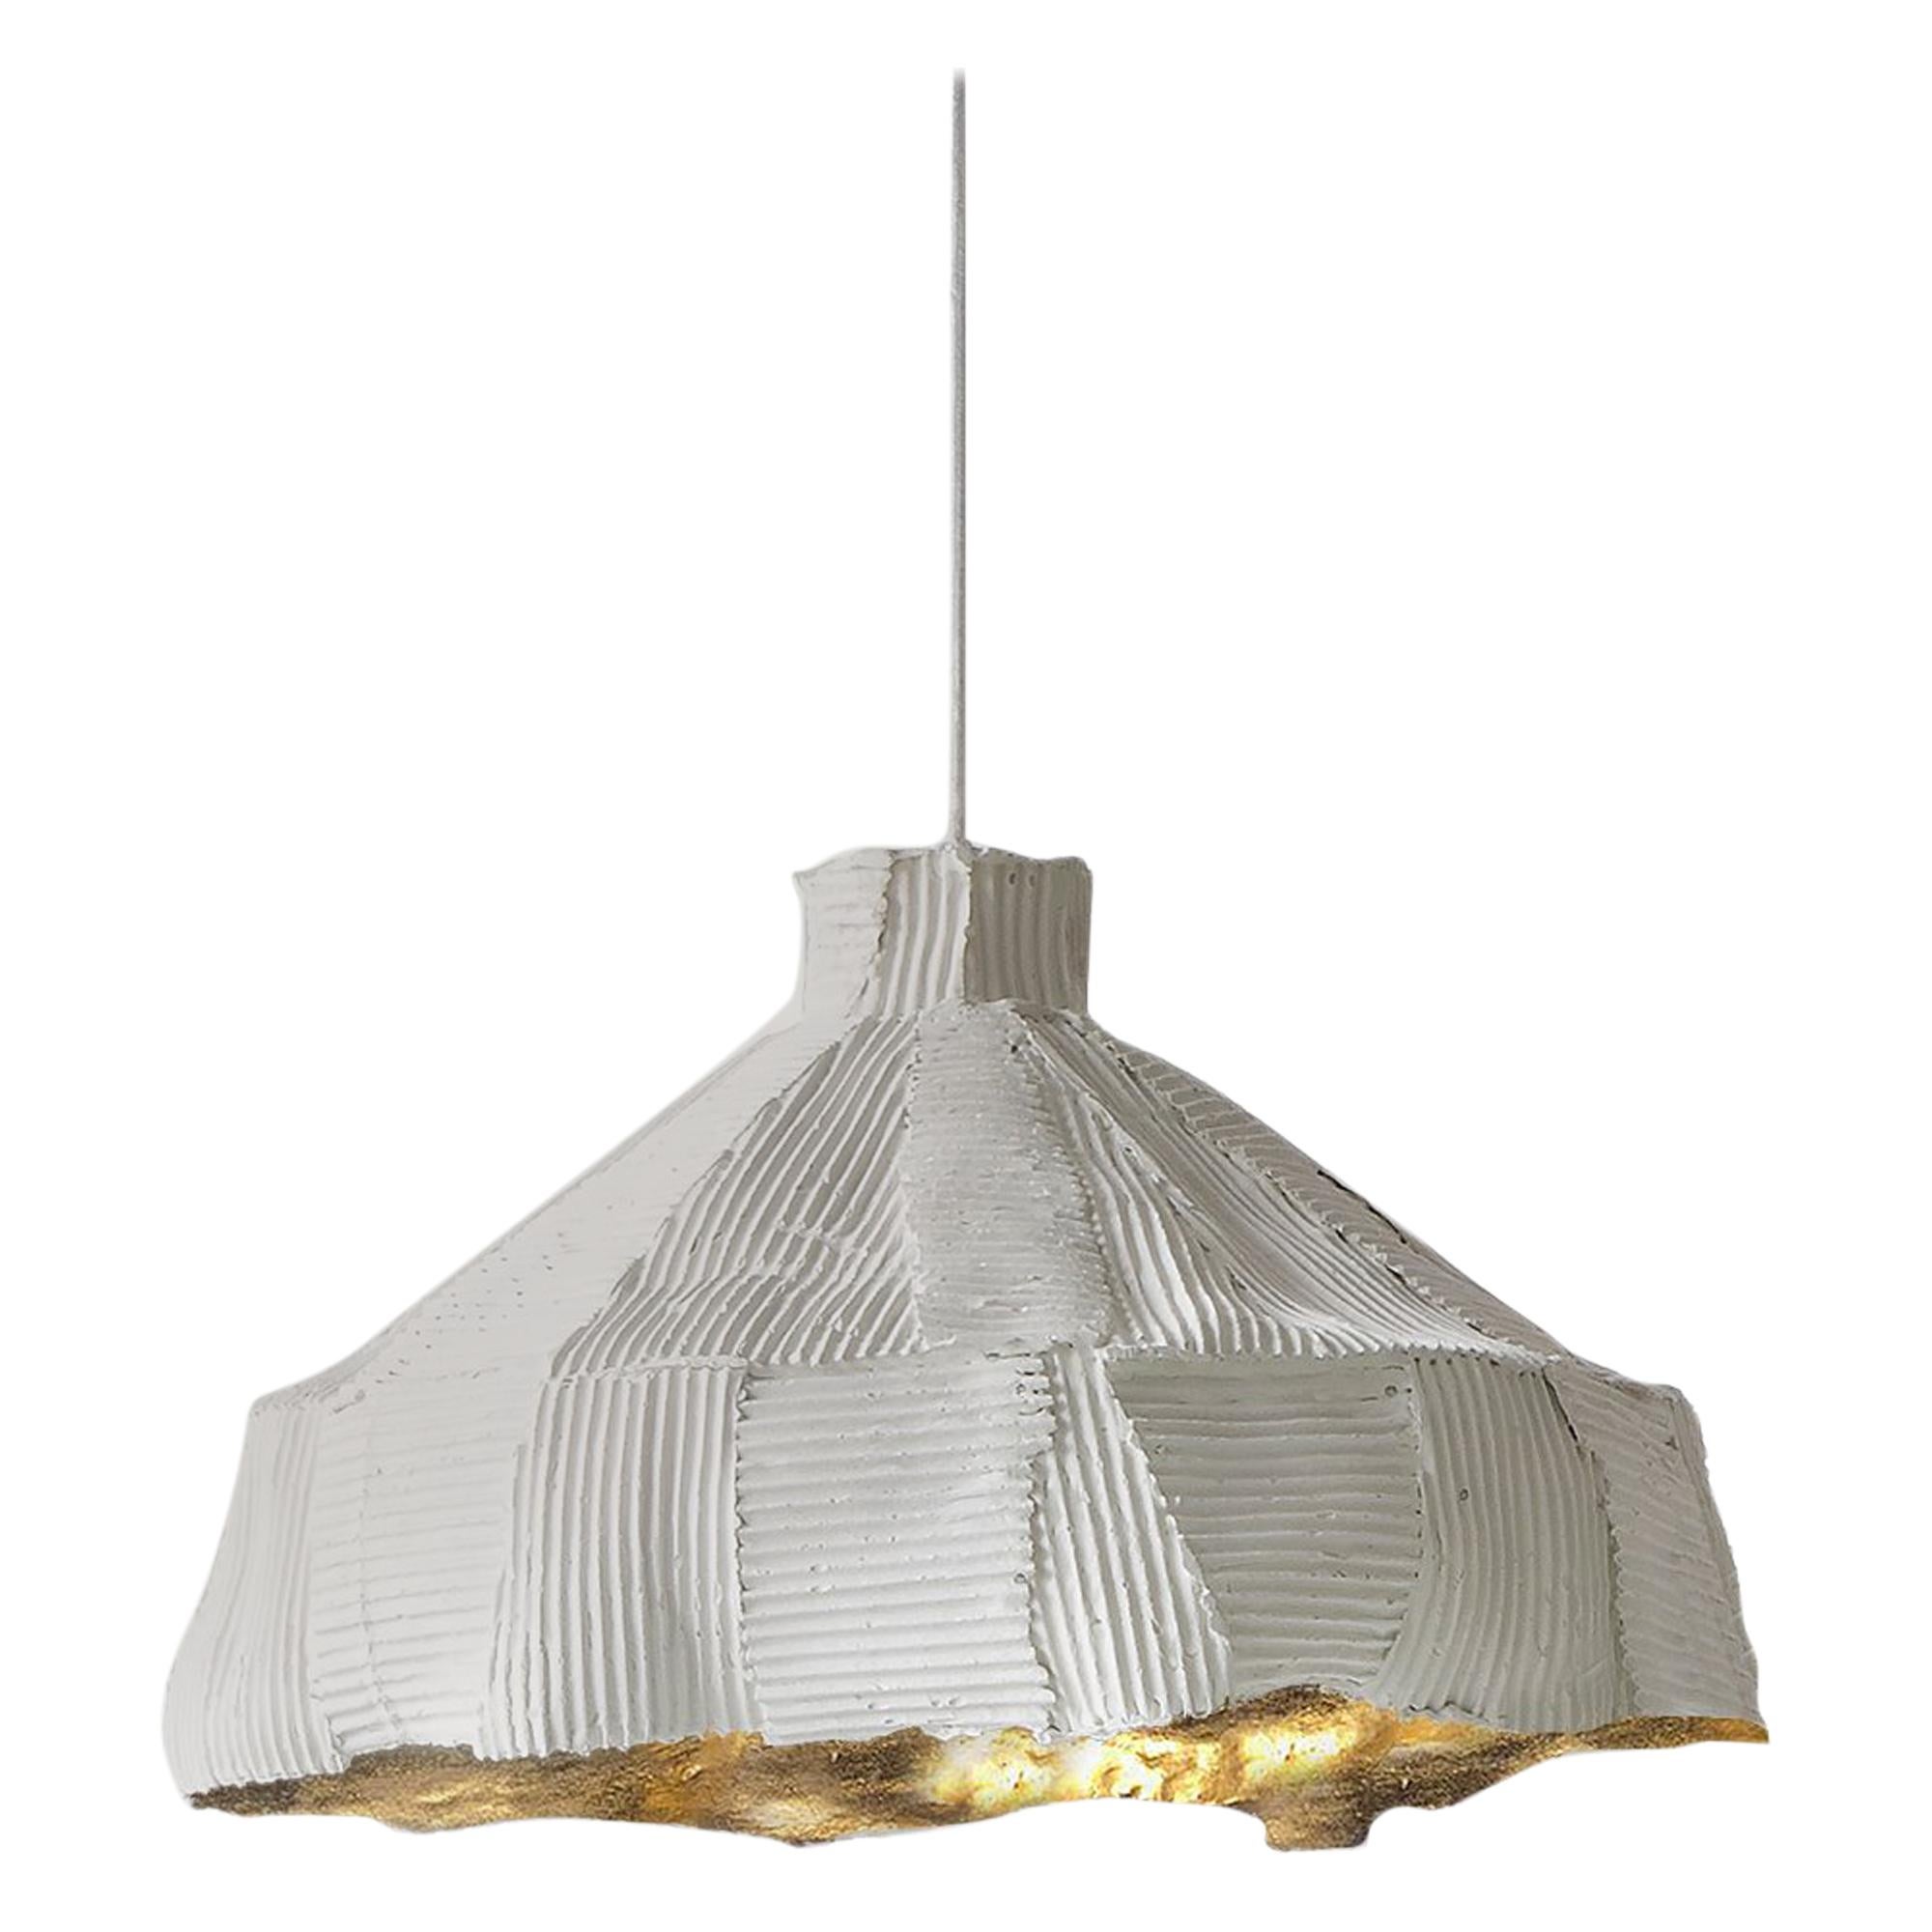 Contemporary Ceramic Anemone Lamp Cartoccio Texture White and Gold Inside